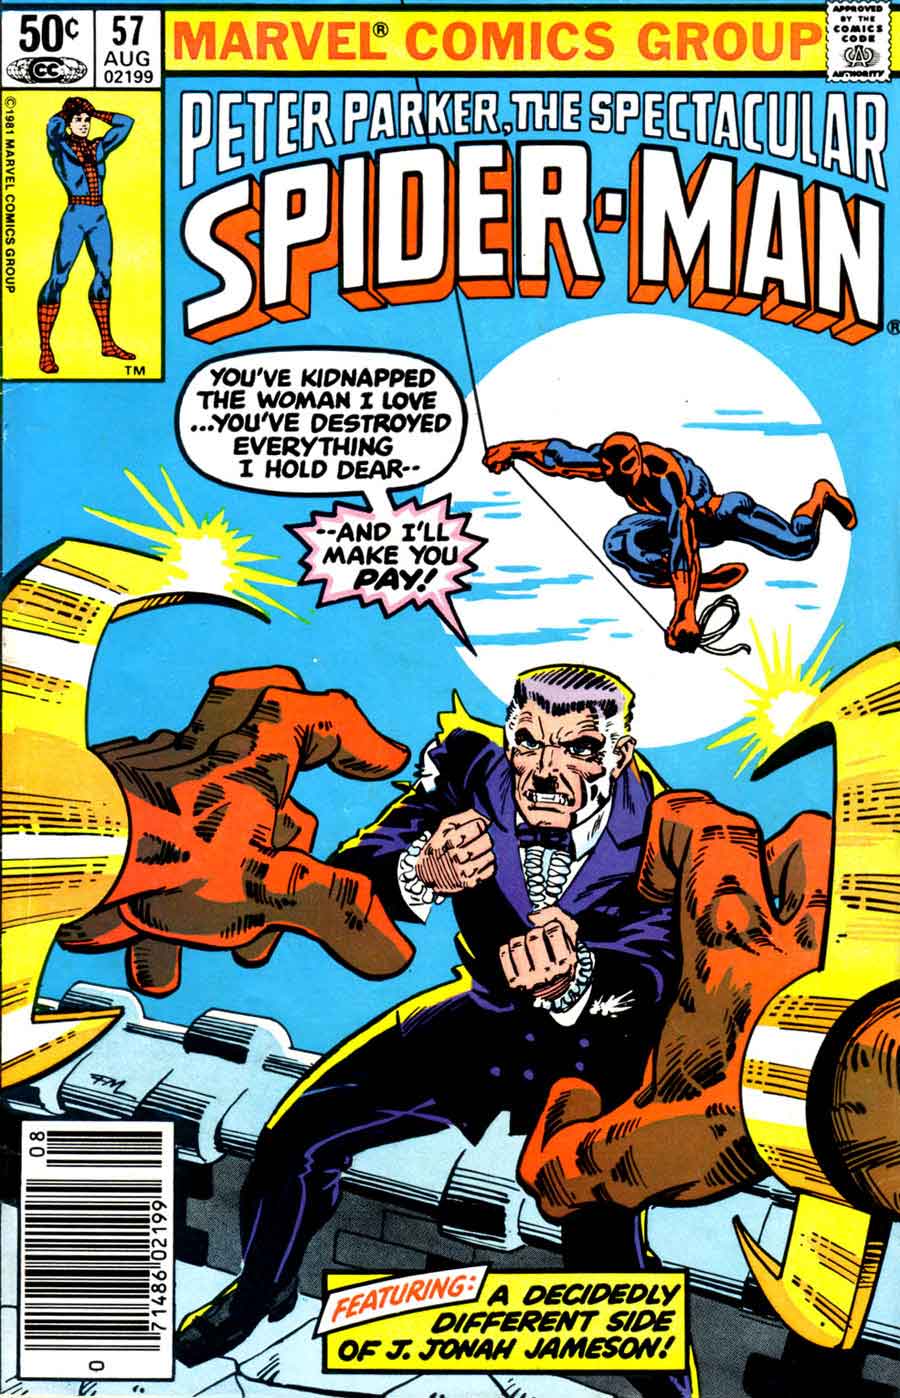 Spectacular Spider-man v2 #57 marvel 1980s comic book cover art by Frank Miller